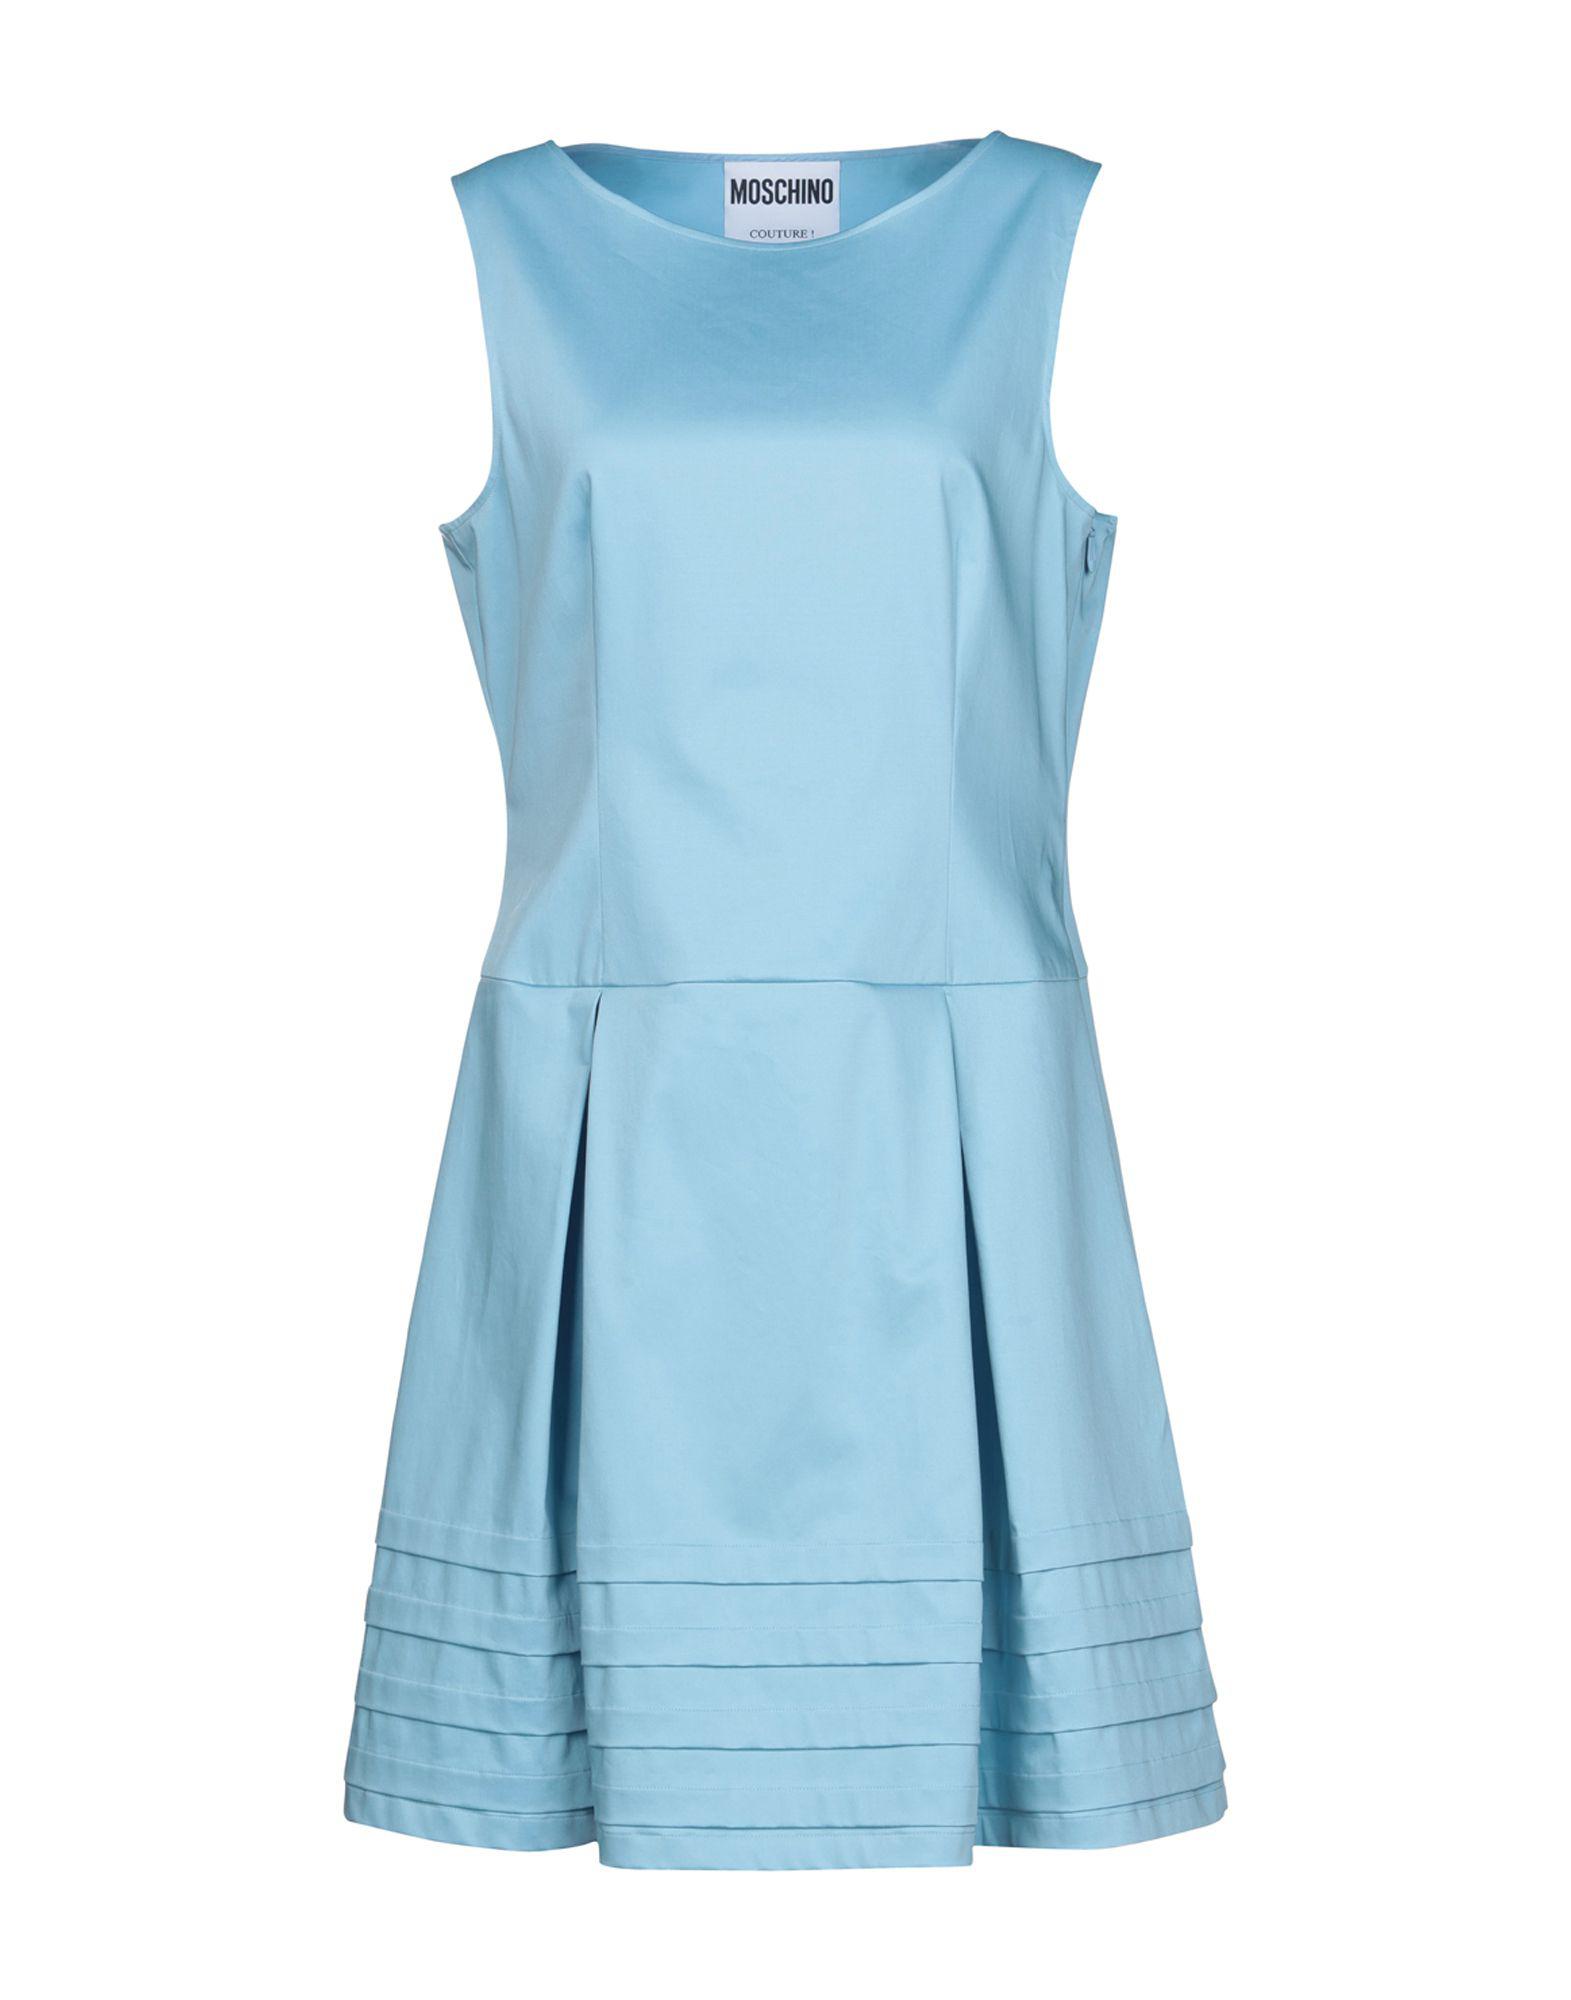 Moschino Satin Short Dress in Sky Blue (Blue) - Lyst